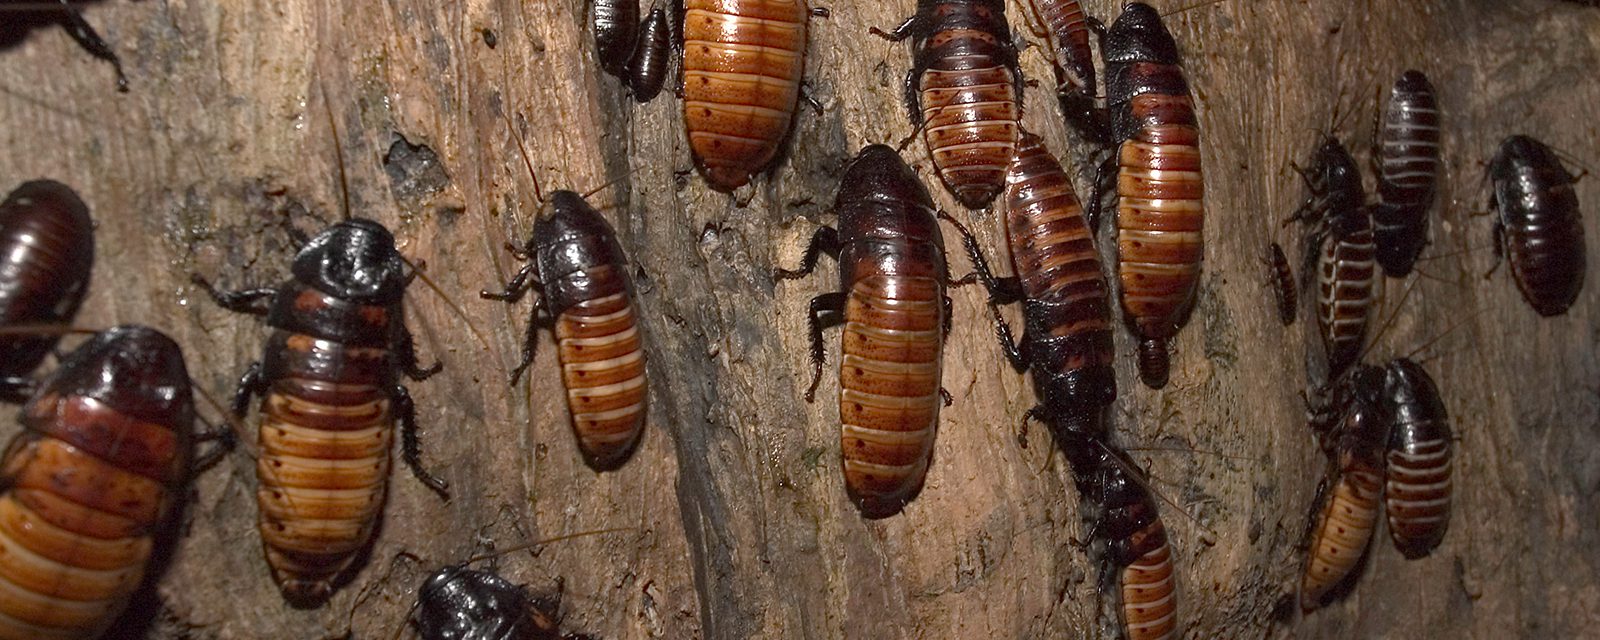 Madagascar hissing cockroach in exhibit